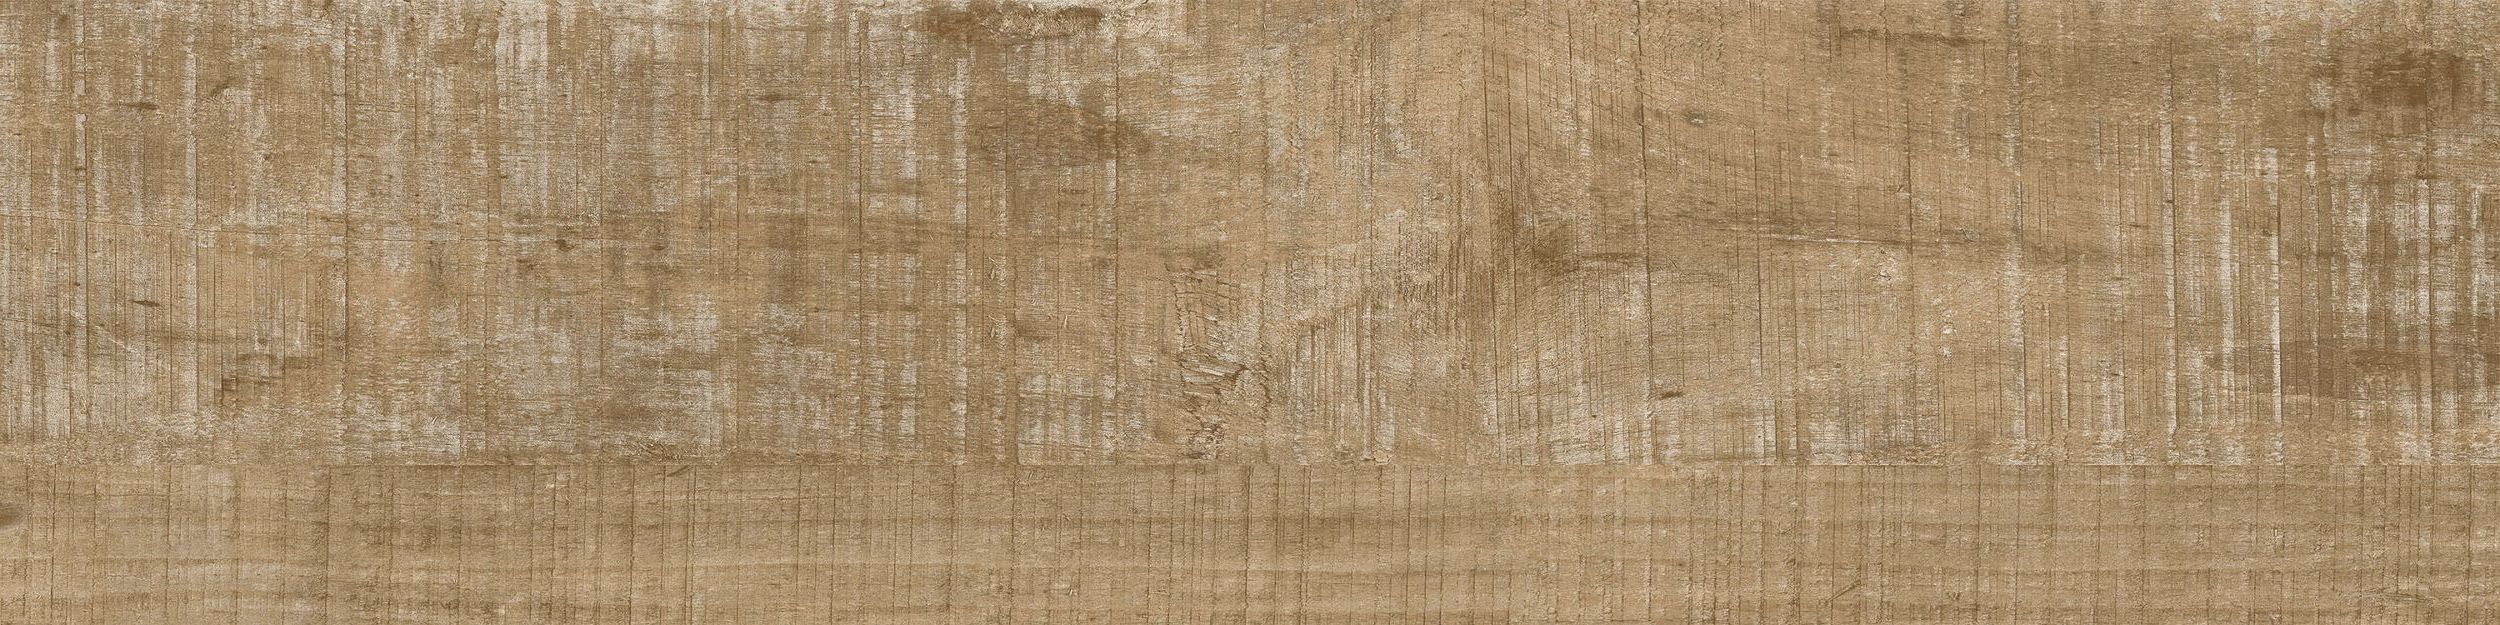 Textured Woodgrains LVT In Distressed Cashew imagen número 1